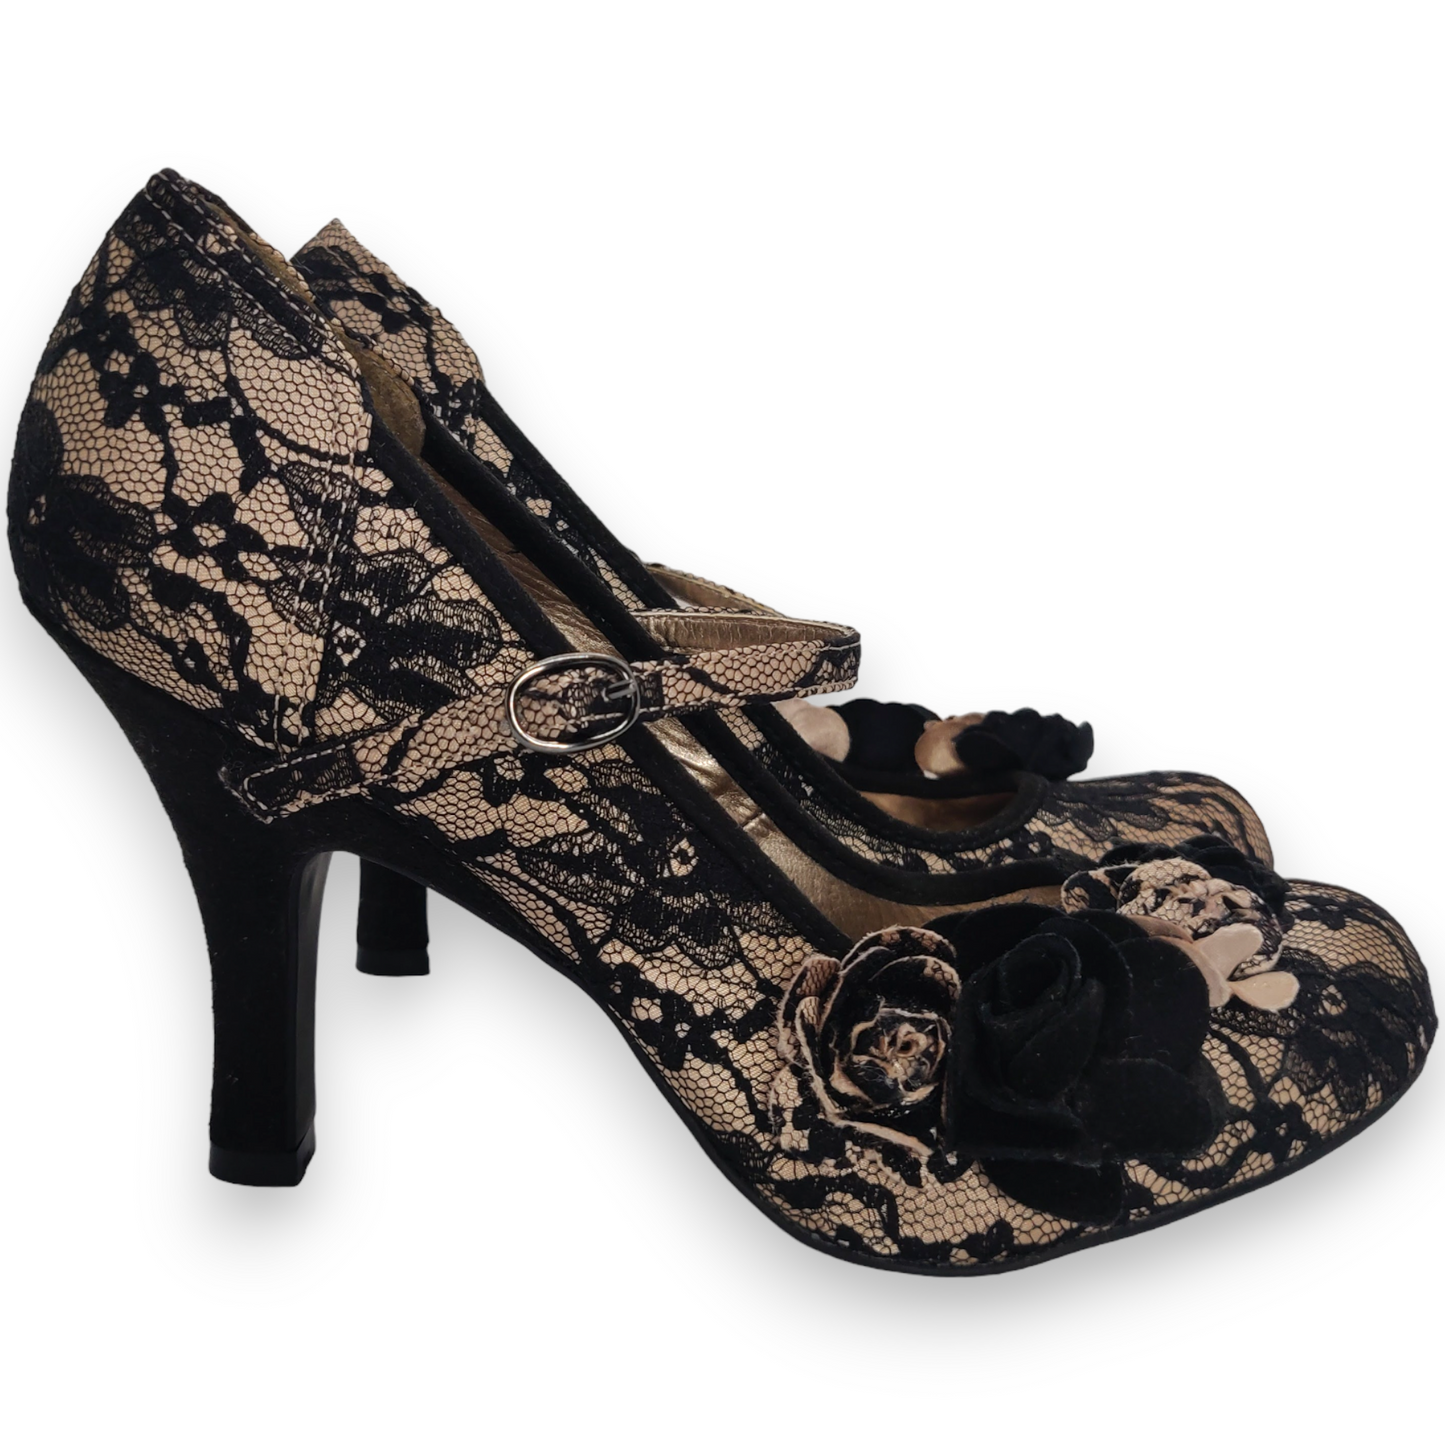 Ruby Shoo Black Lace Champagne Roses Court Heels Shoes Women Size UK 6 (EU 39)